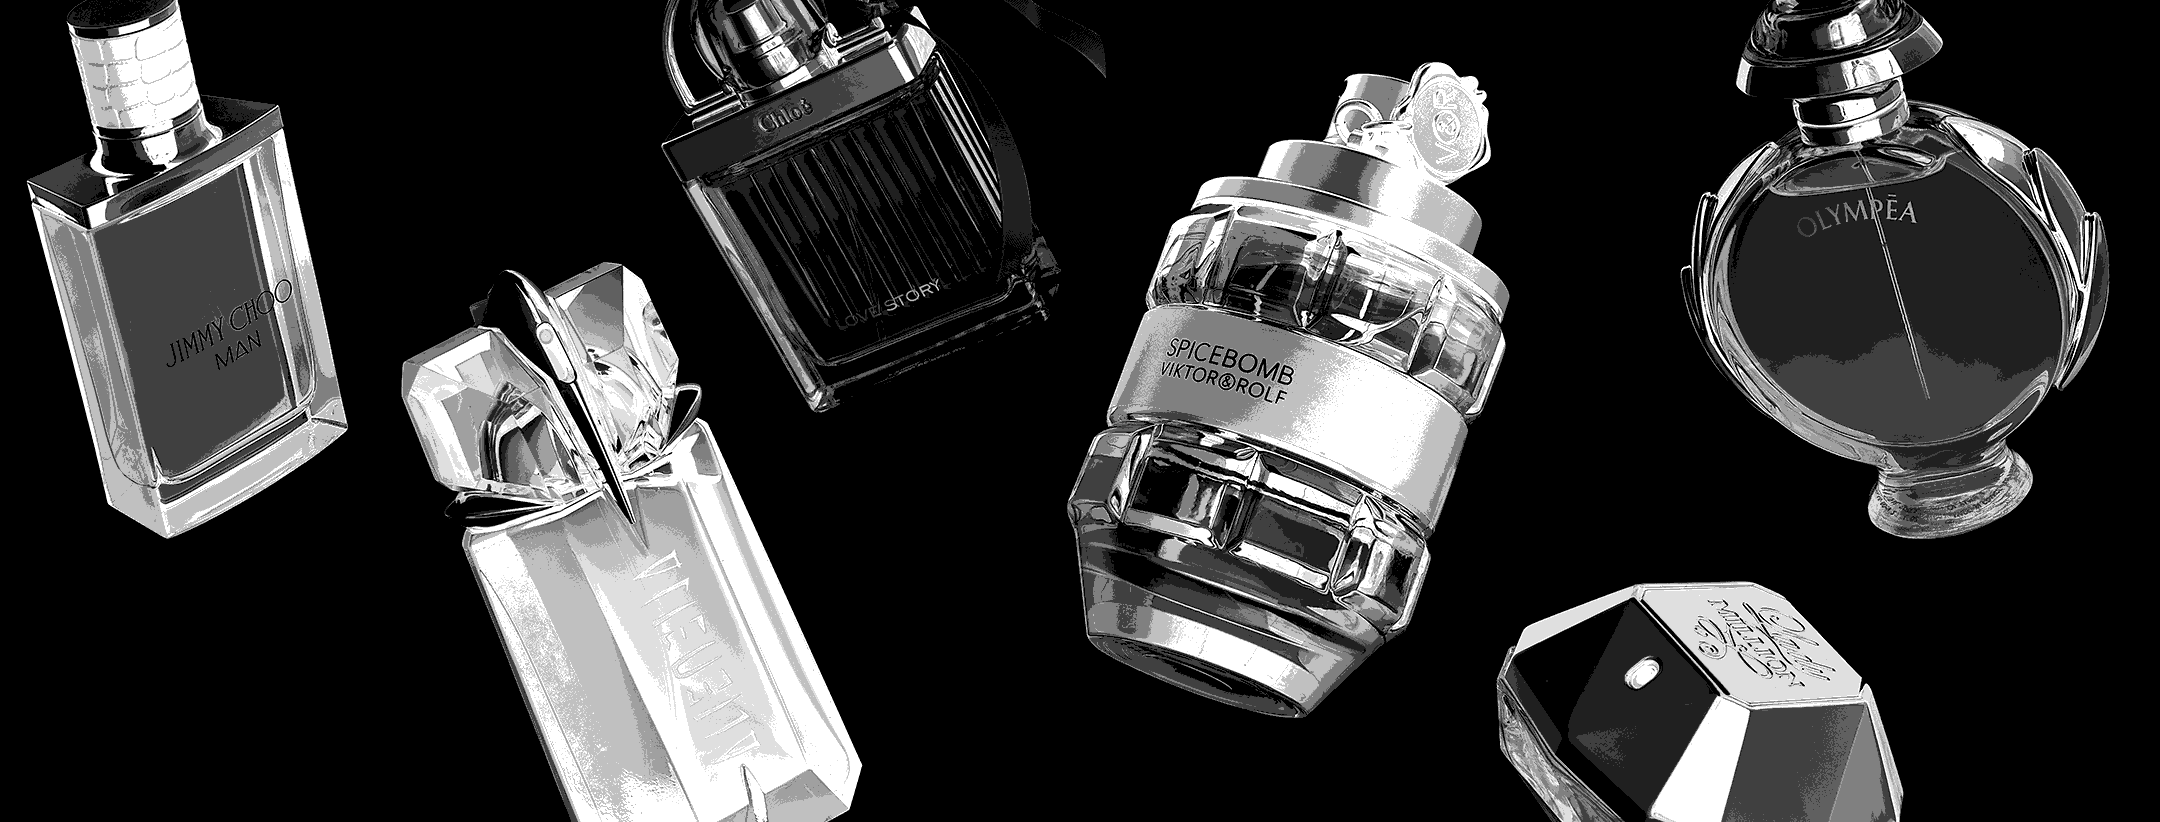 Perfume Direct - Performance Marketing Agency - TIDAL Digital